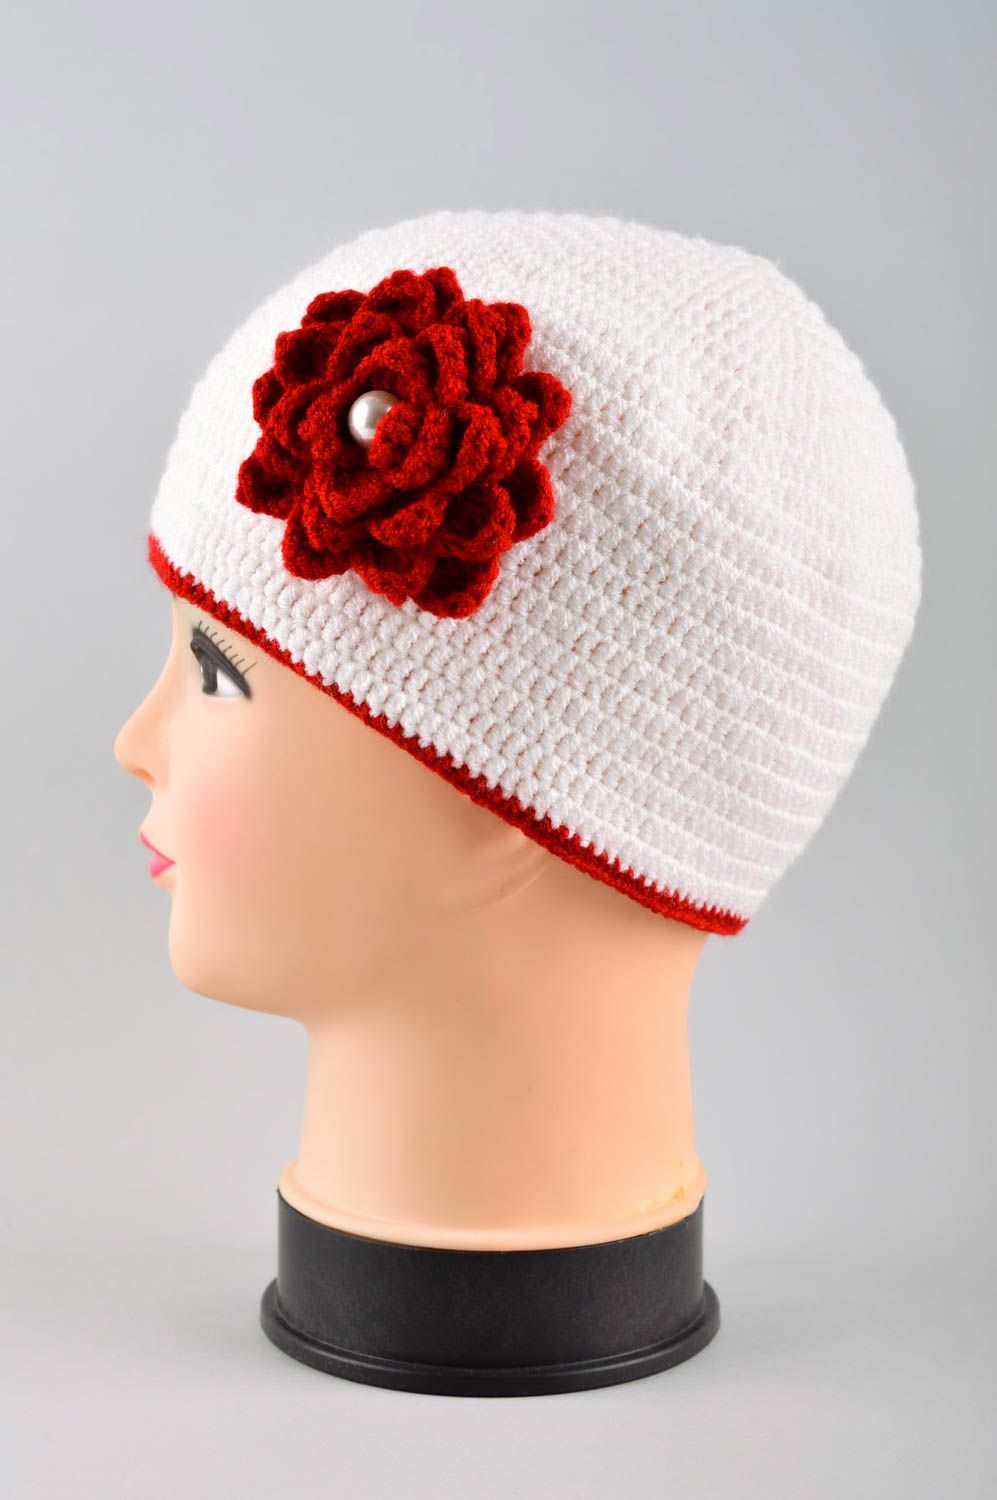 Handmade hat winter hat for children gift for girl warm cap knitted hat photo 3